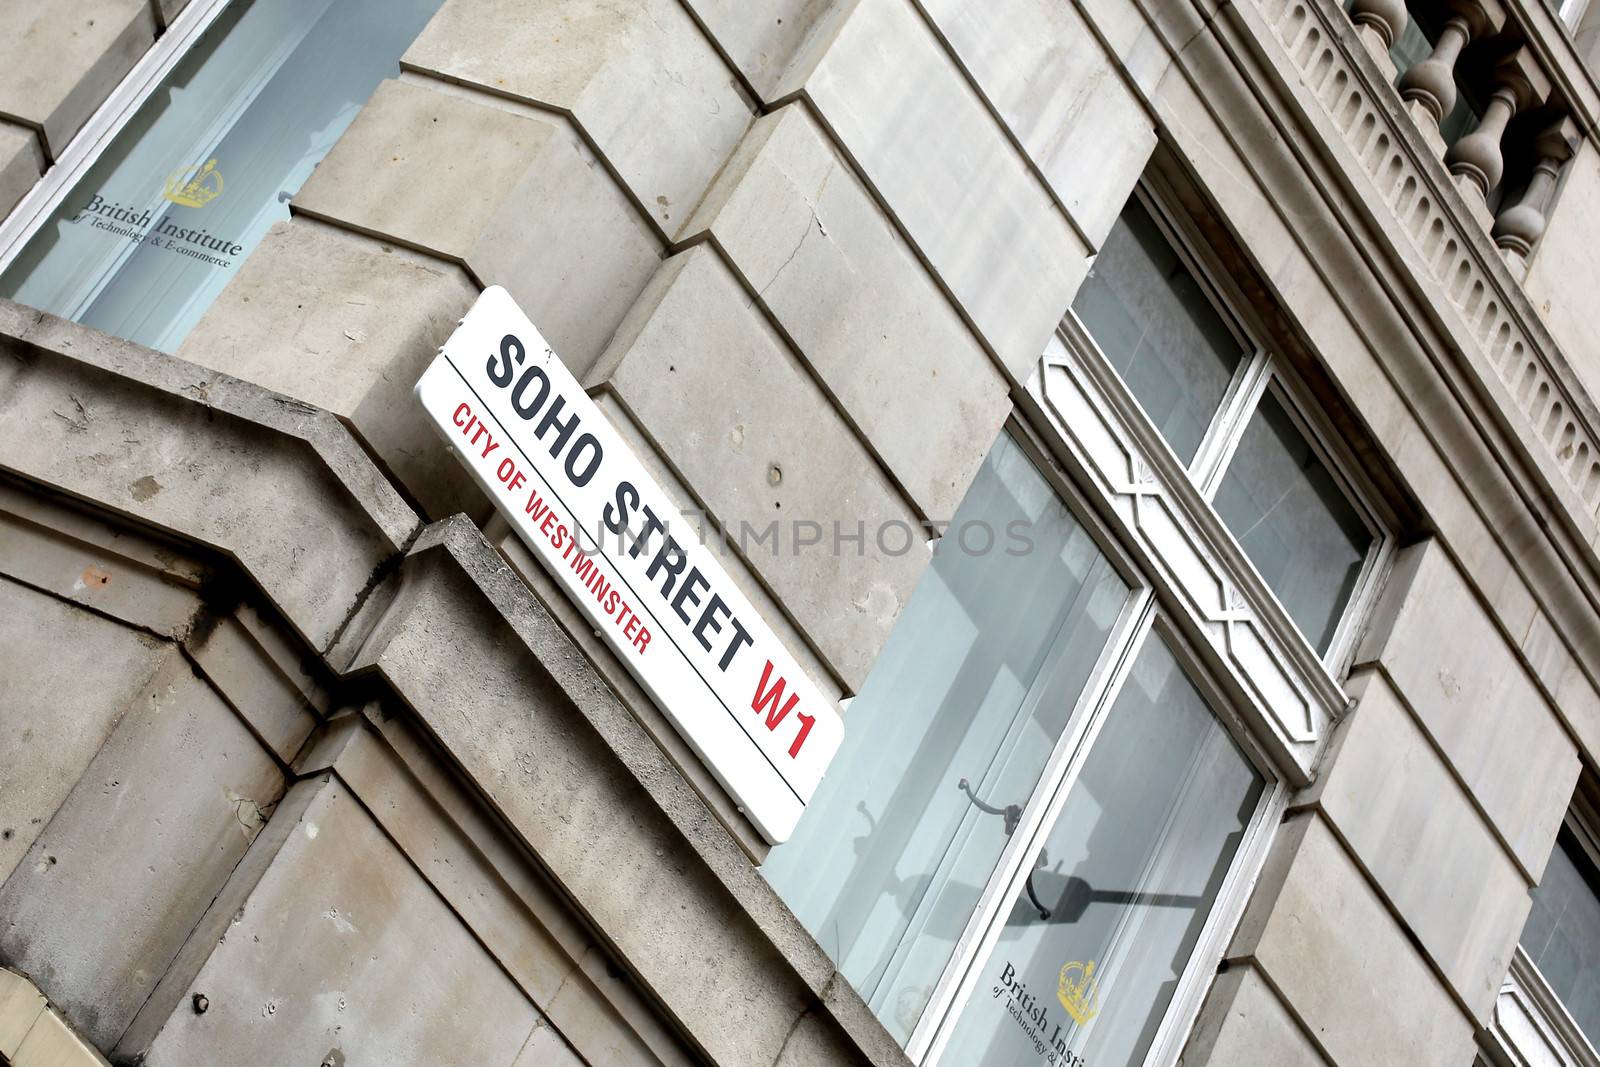 British Institute of Technology and E-Commerce Soho Street London by Whiteboxmedia